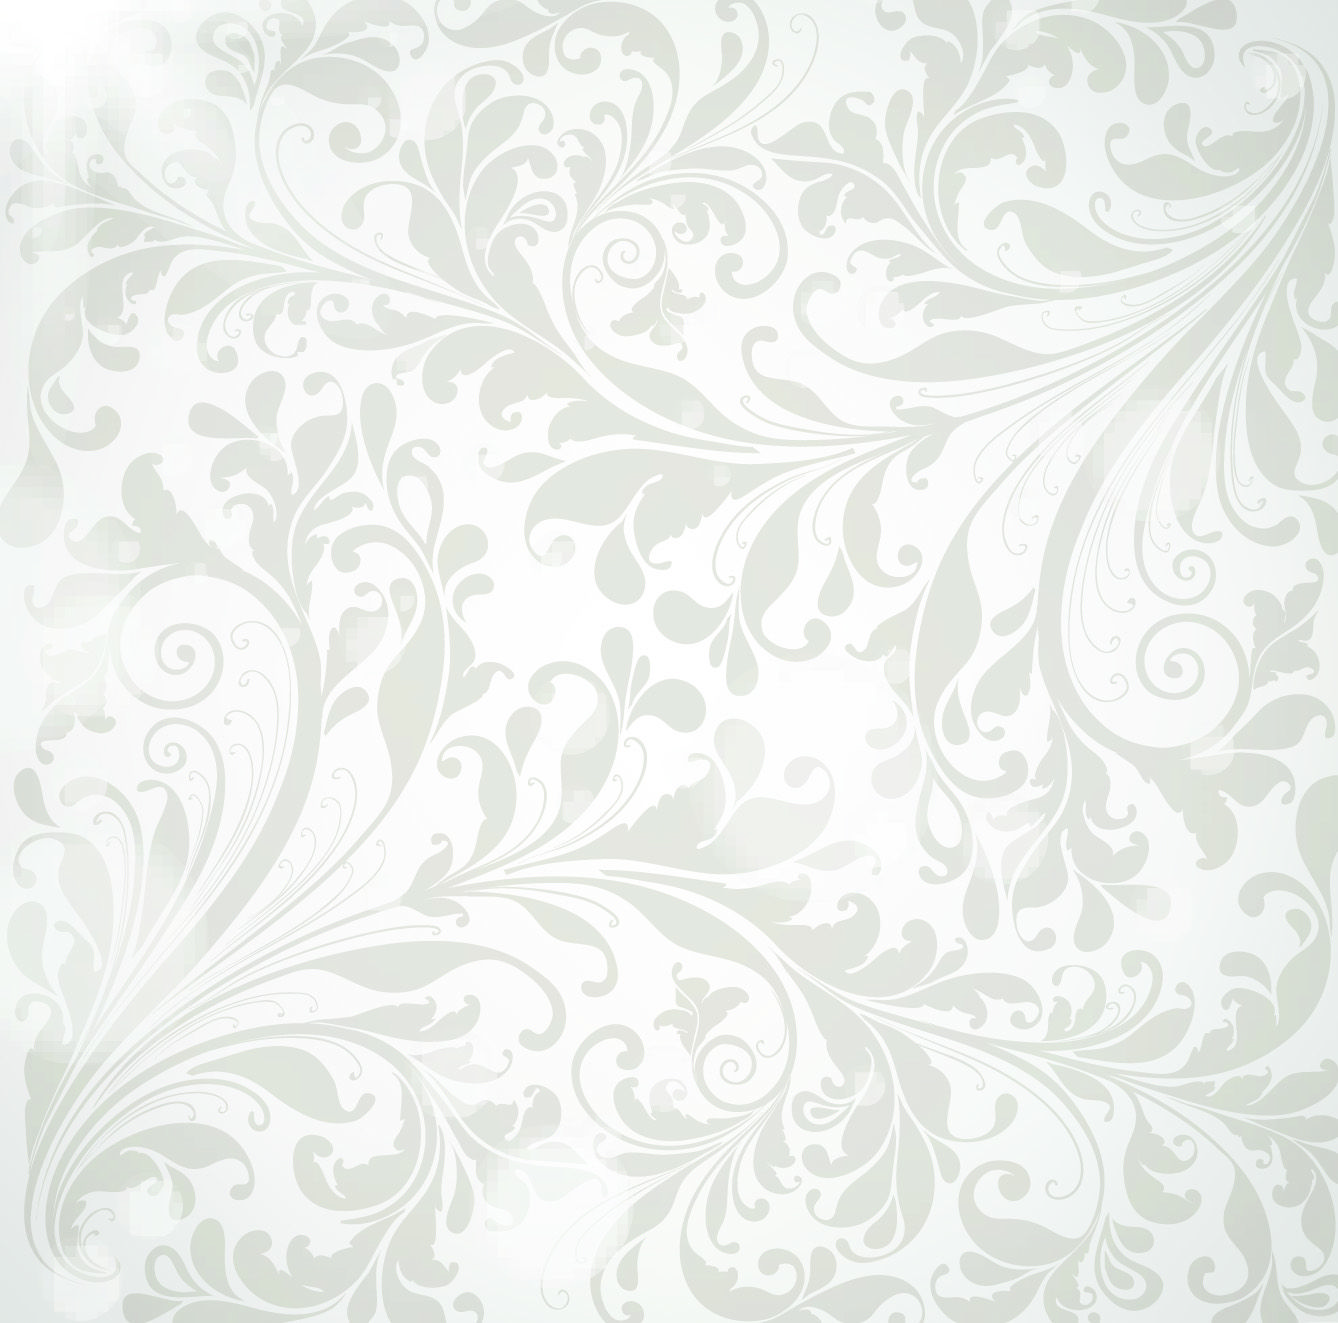 Floral wallpaper vector Free Vector / 4Vector